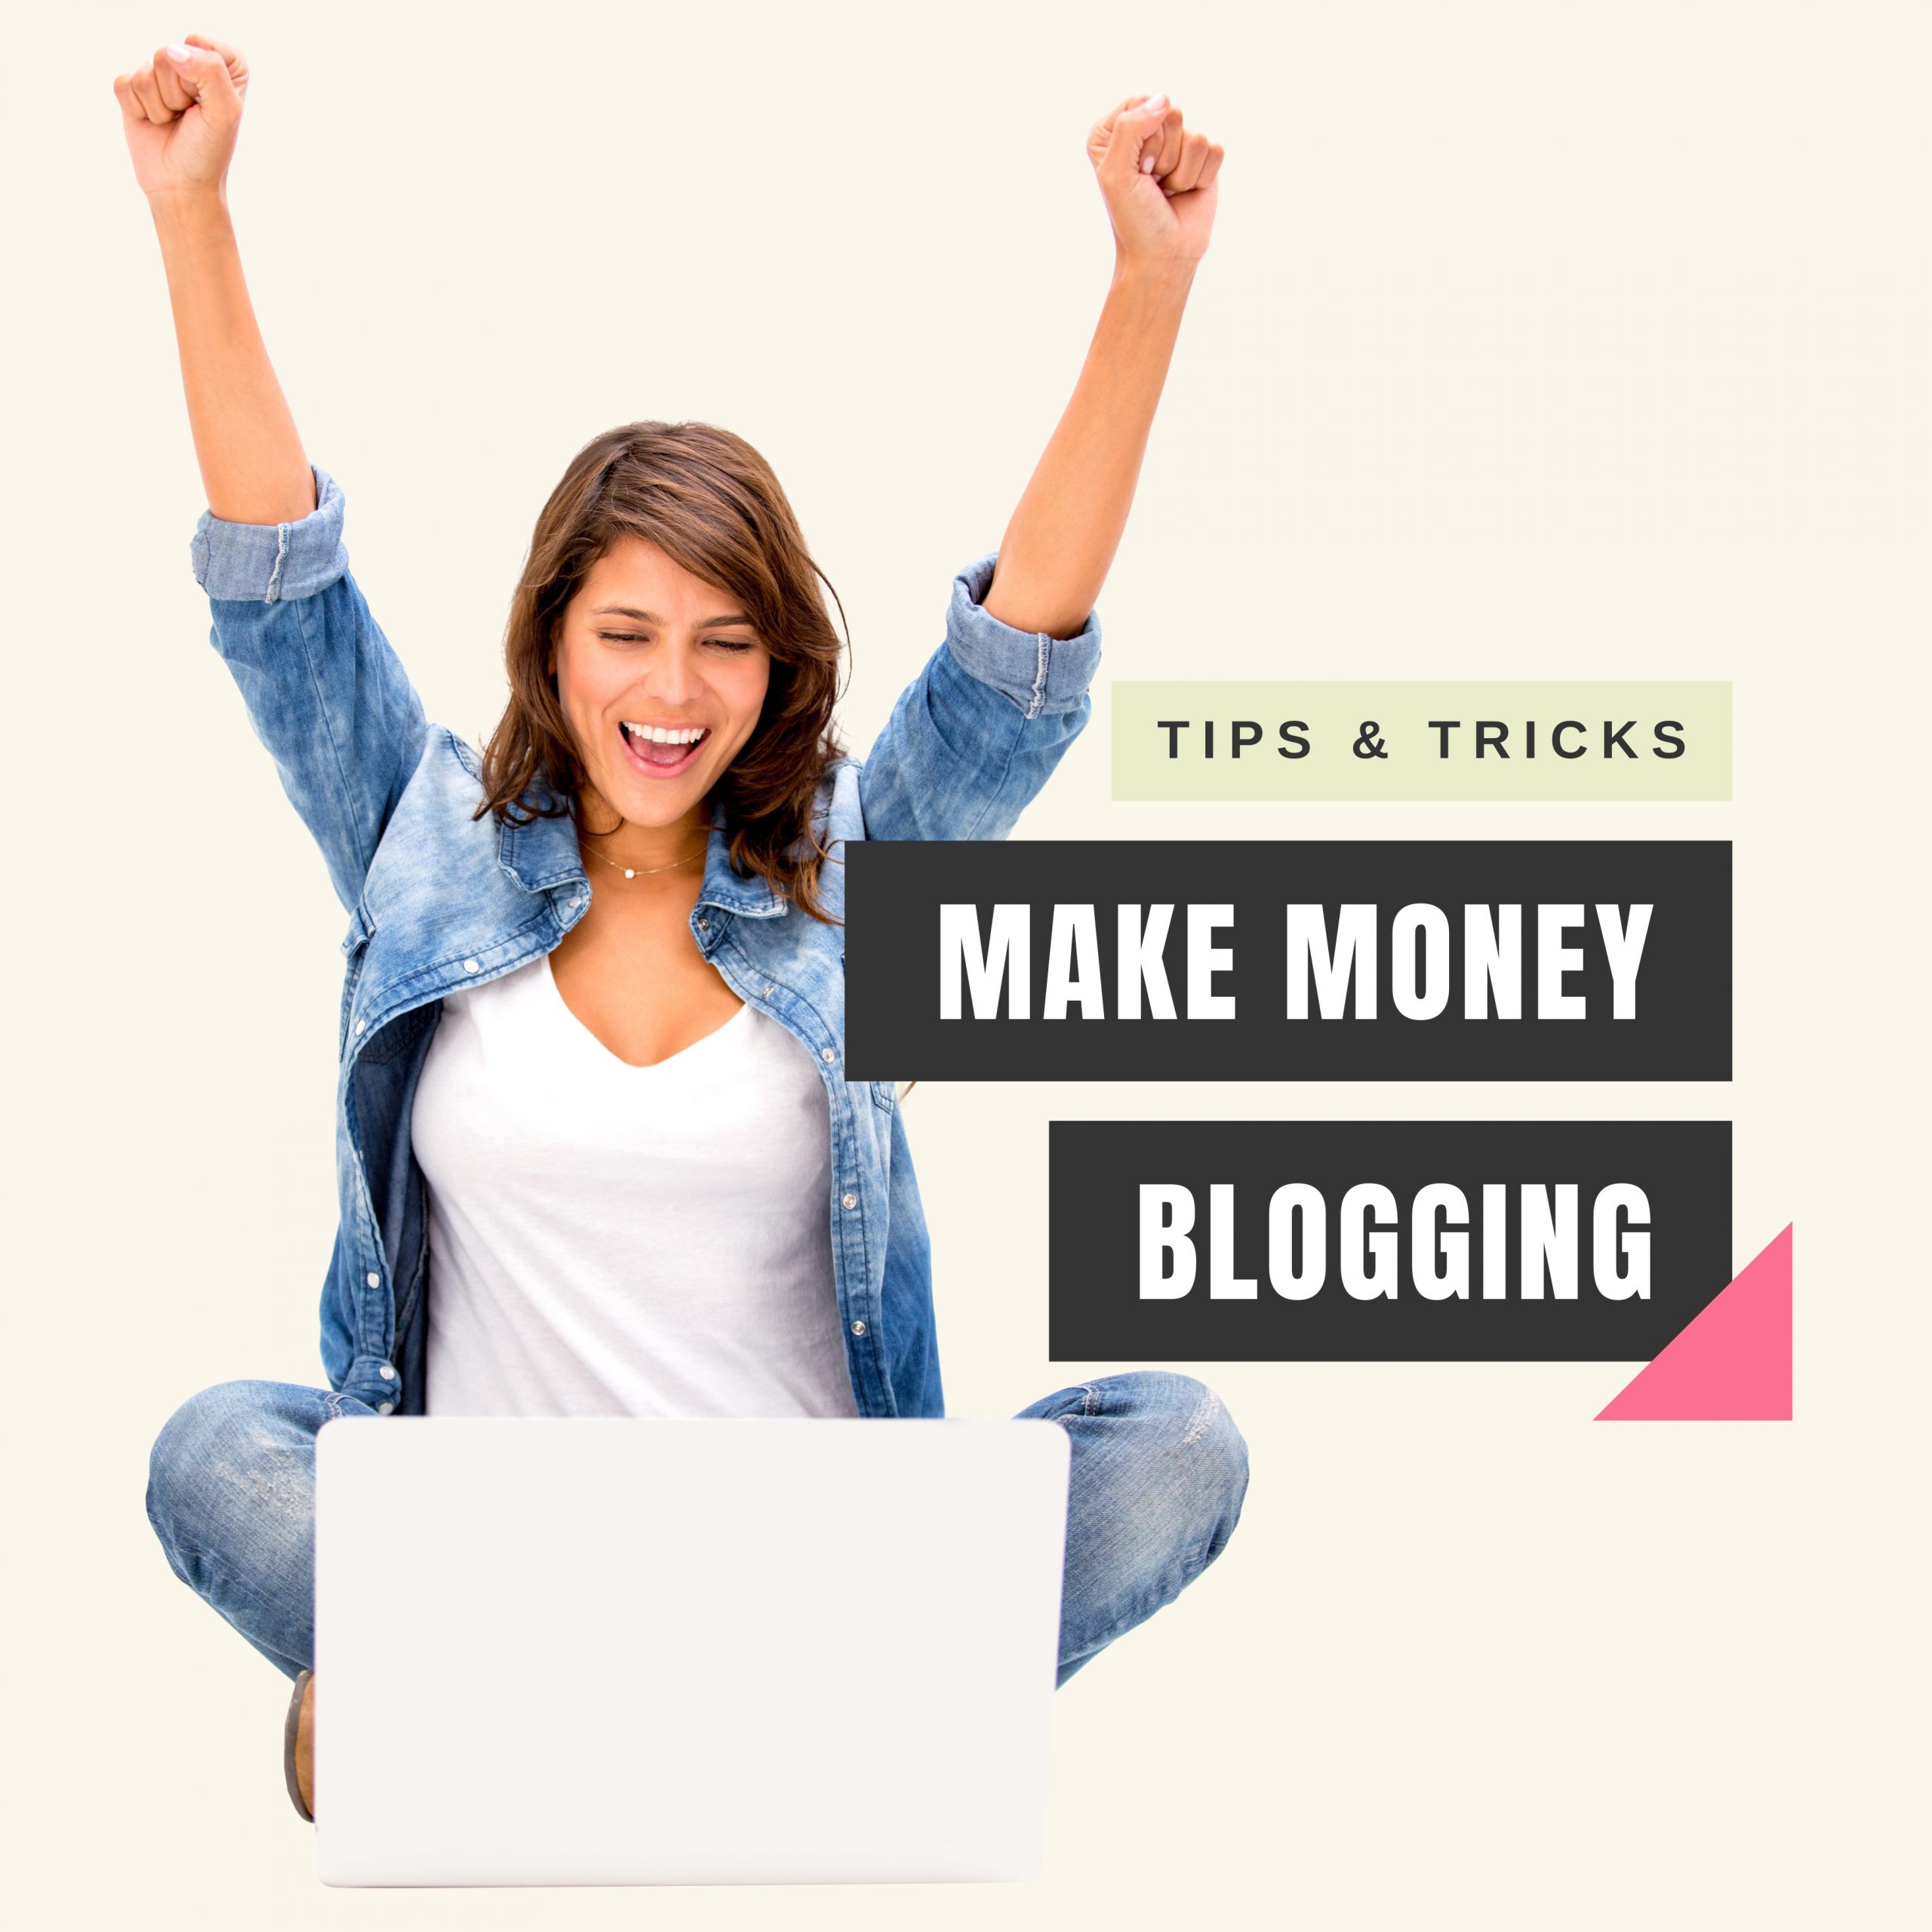 Make money blogging tips and tricks